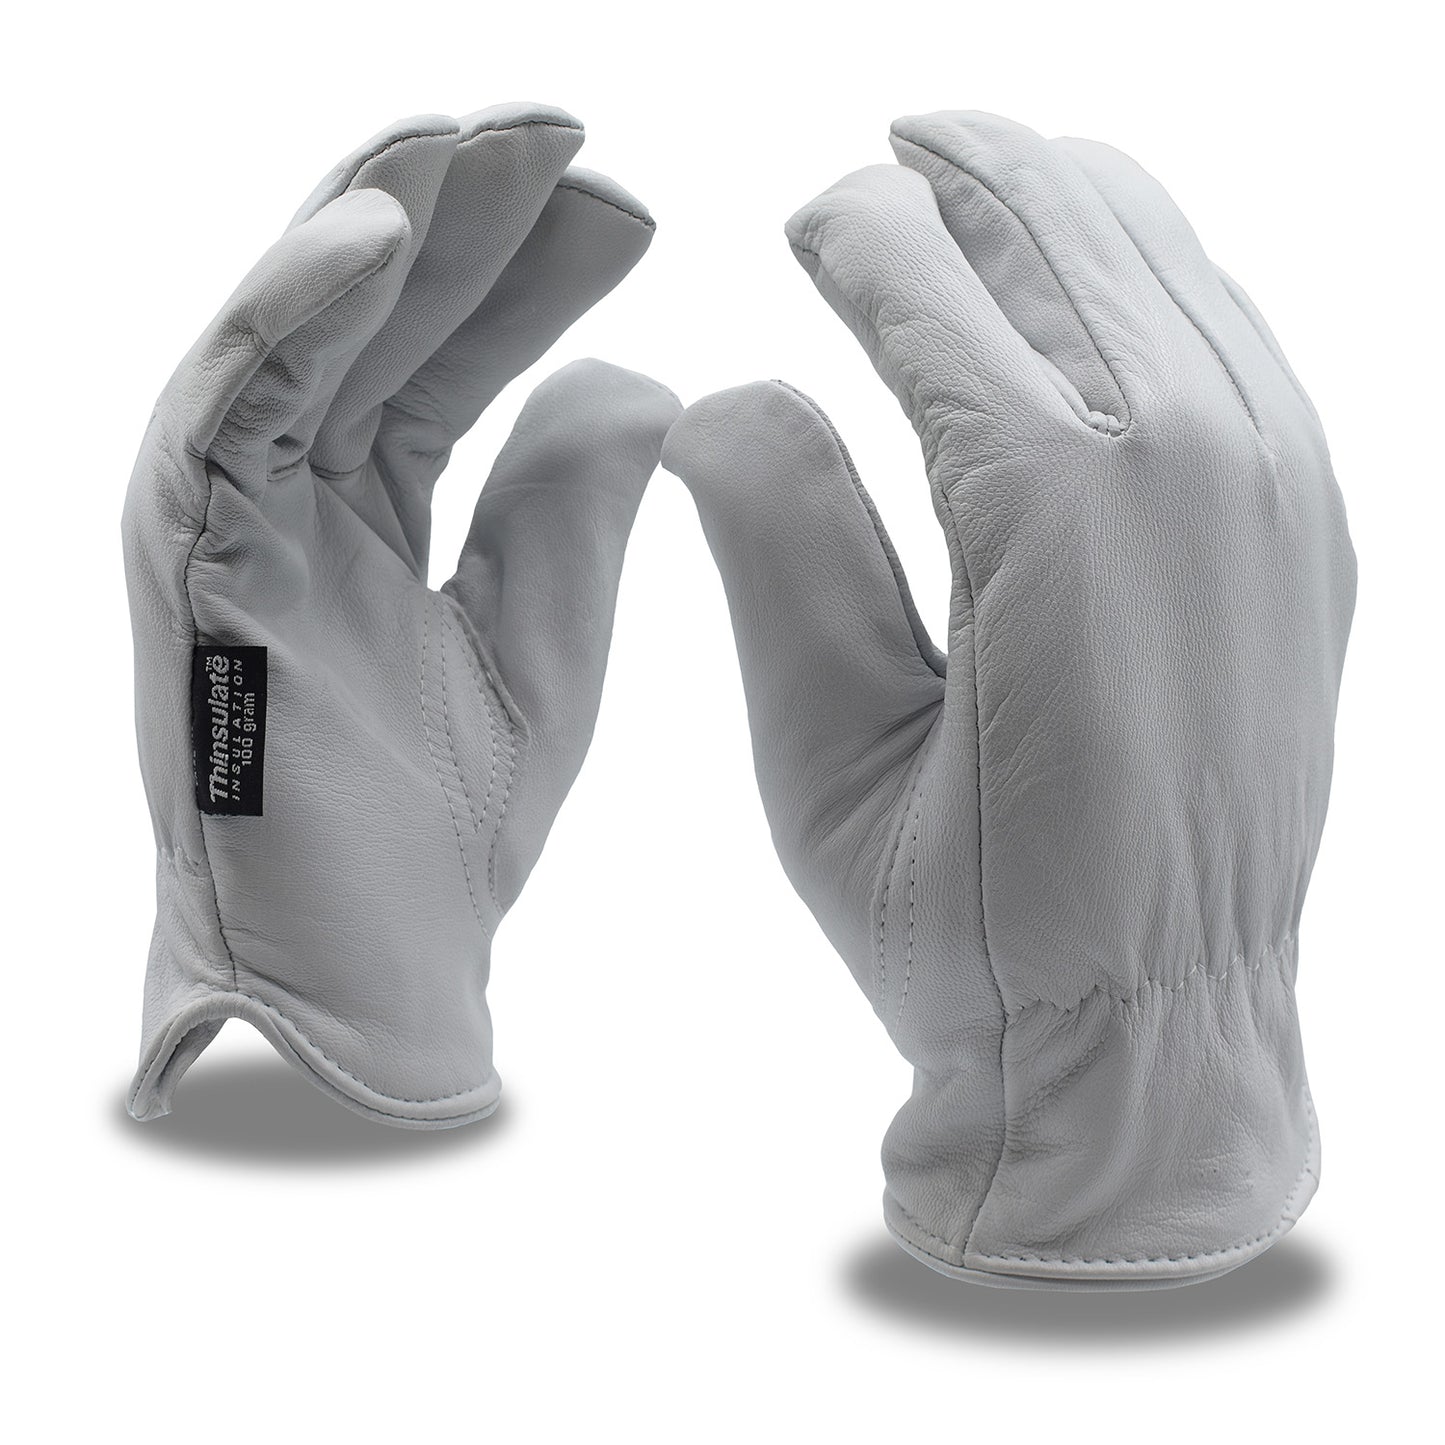 Goatskin Thermal Gloves, Thinsulate Lining, Bulk 12-Pack